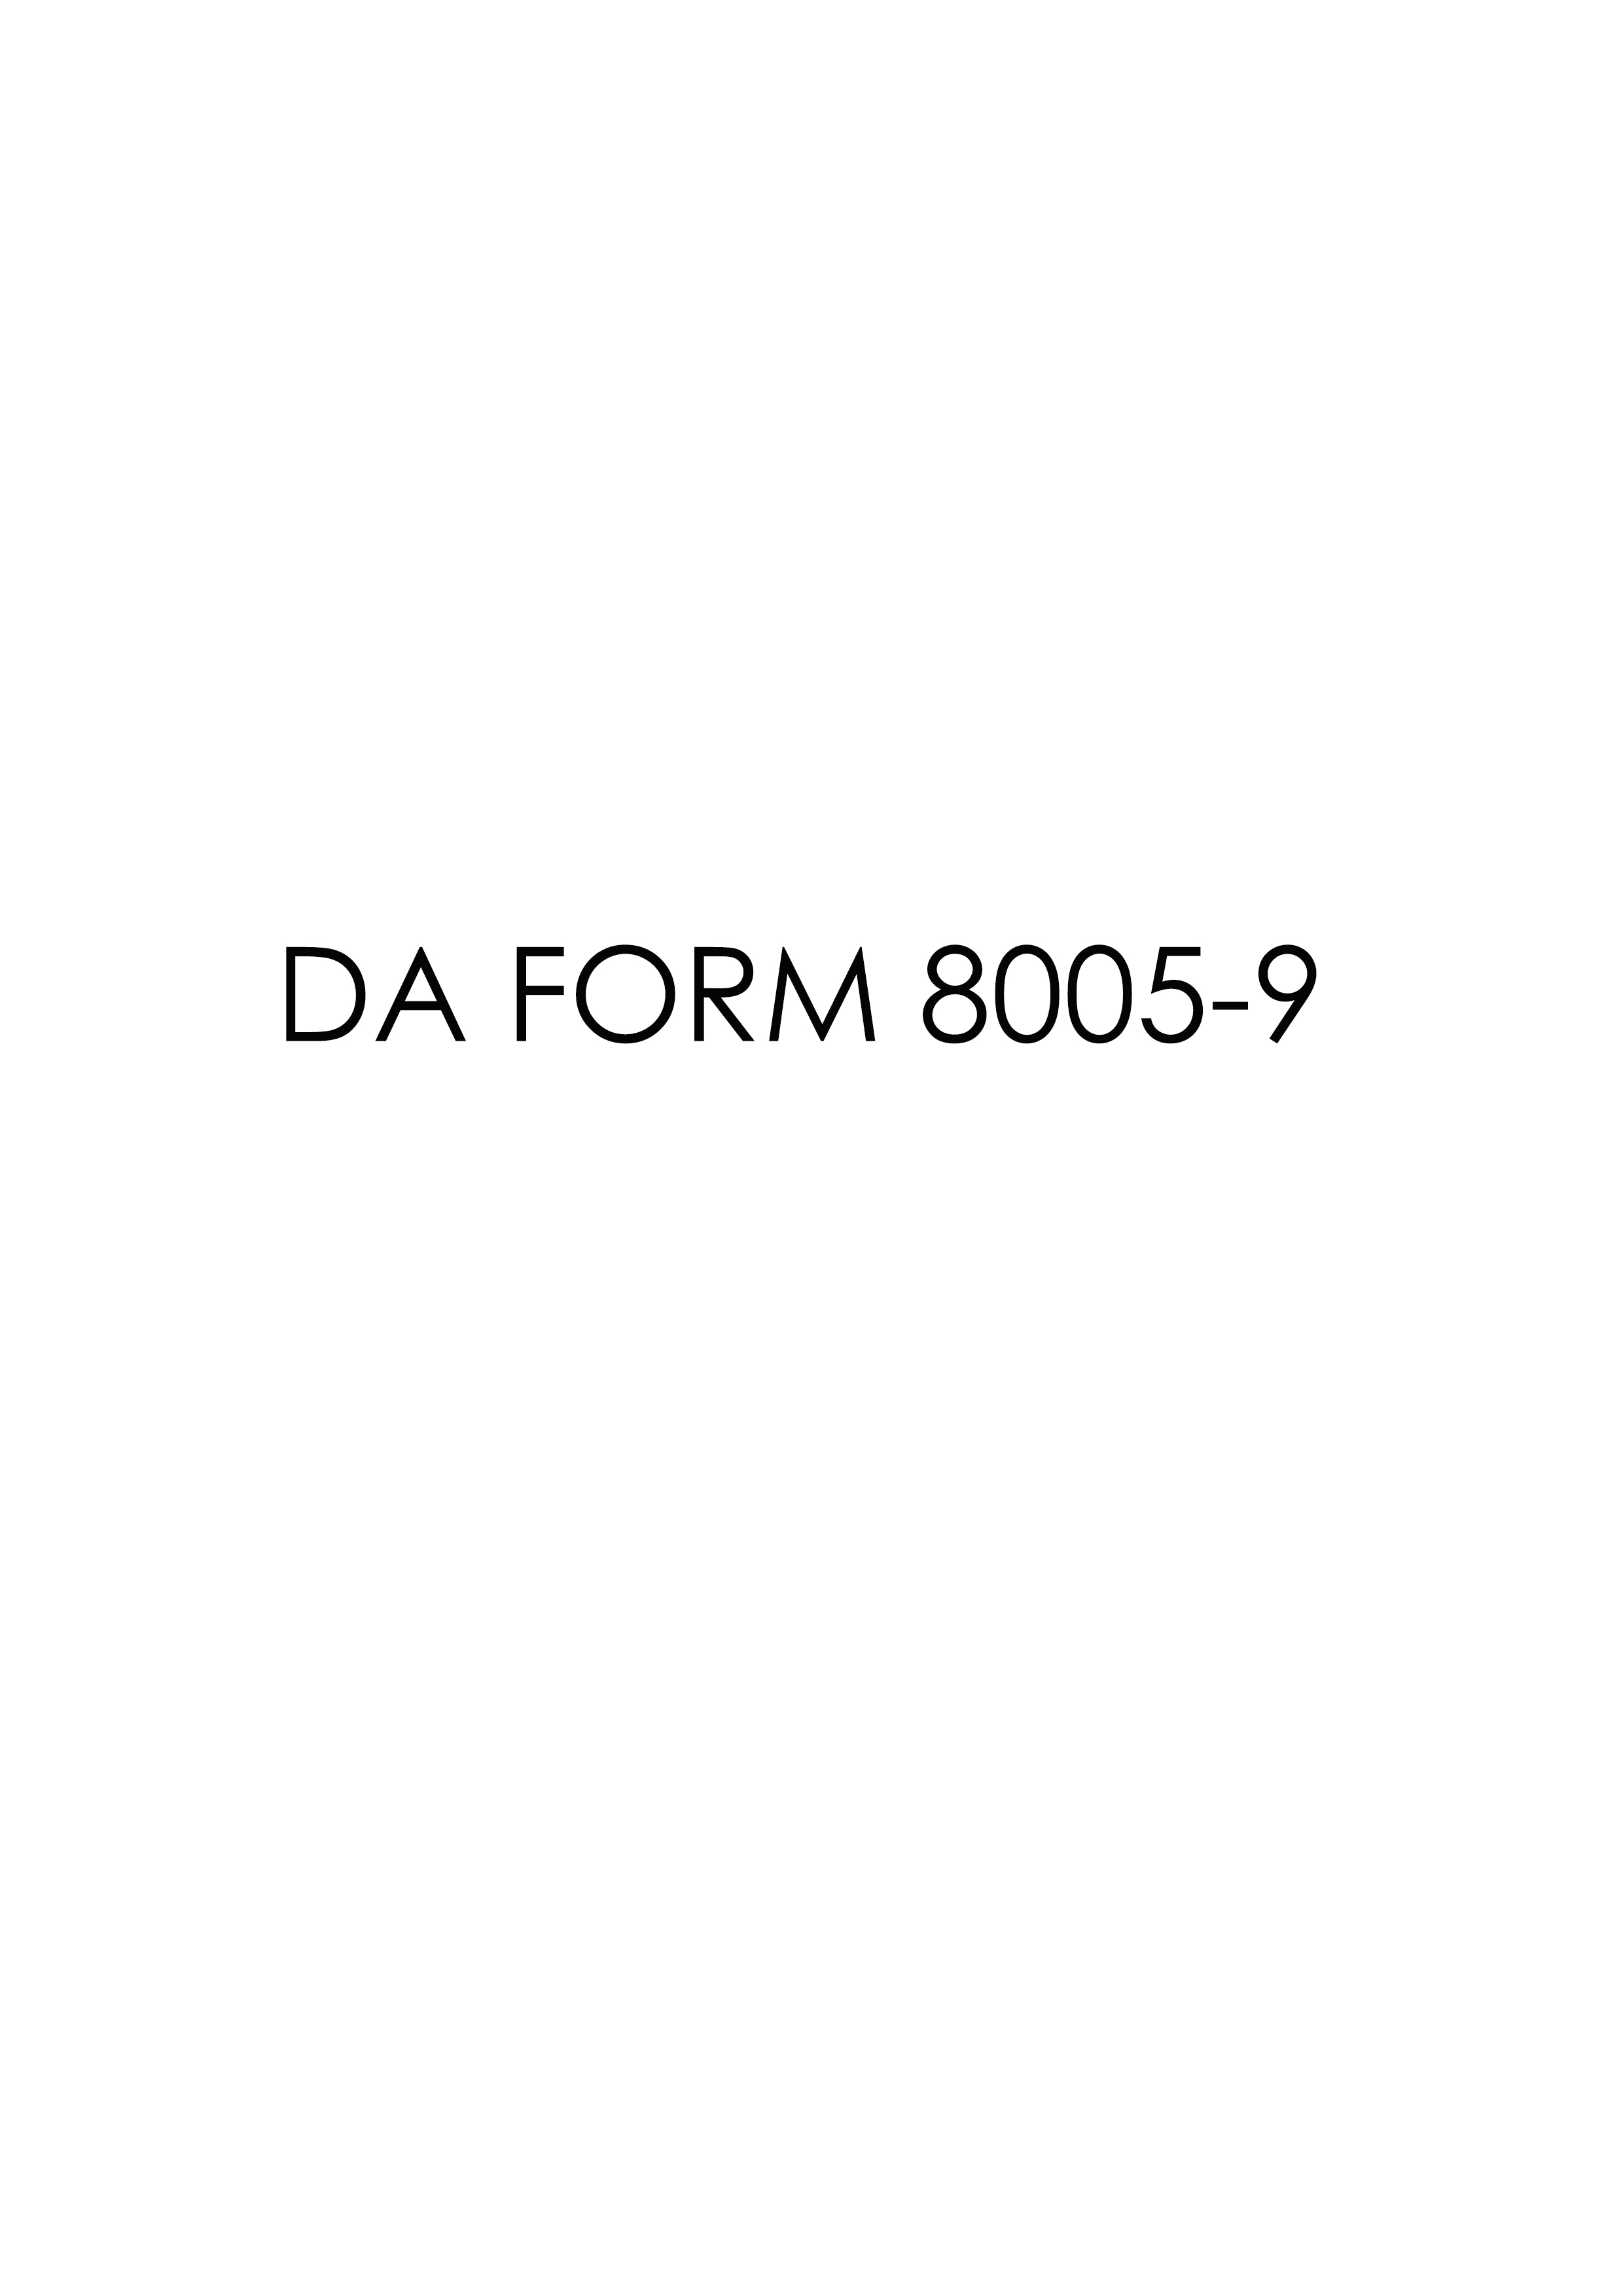 Download da 8005-9 Form